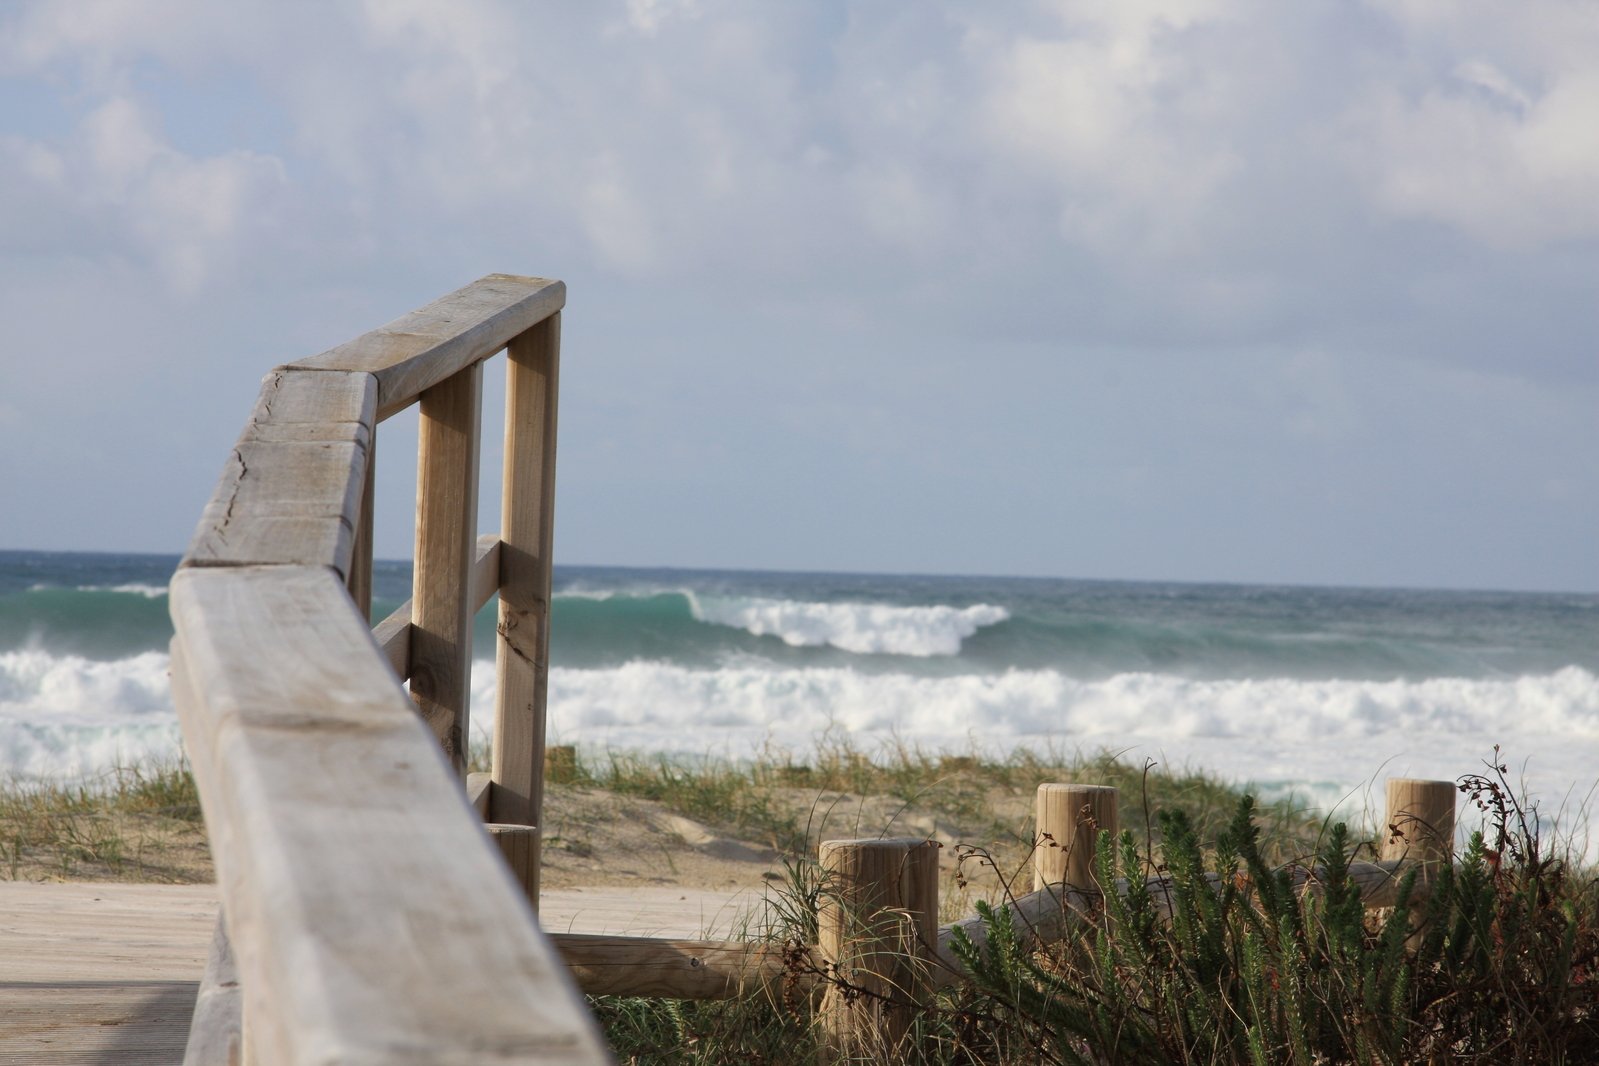 the bench overlooks the beach as an ocean approaches